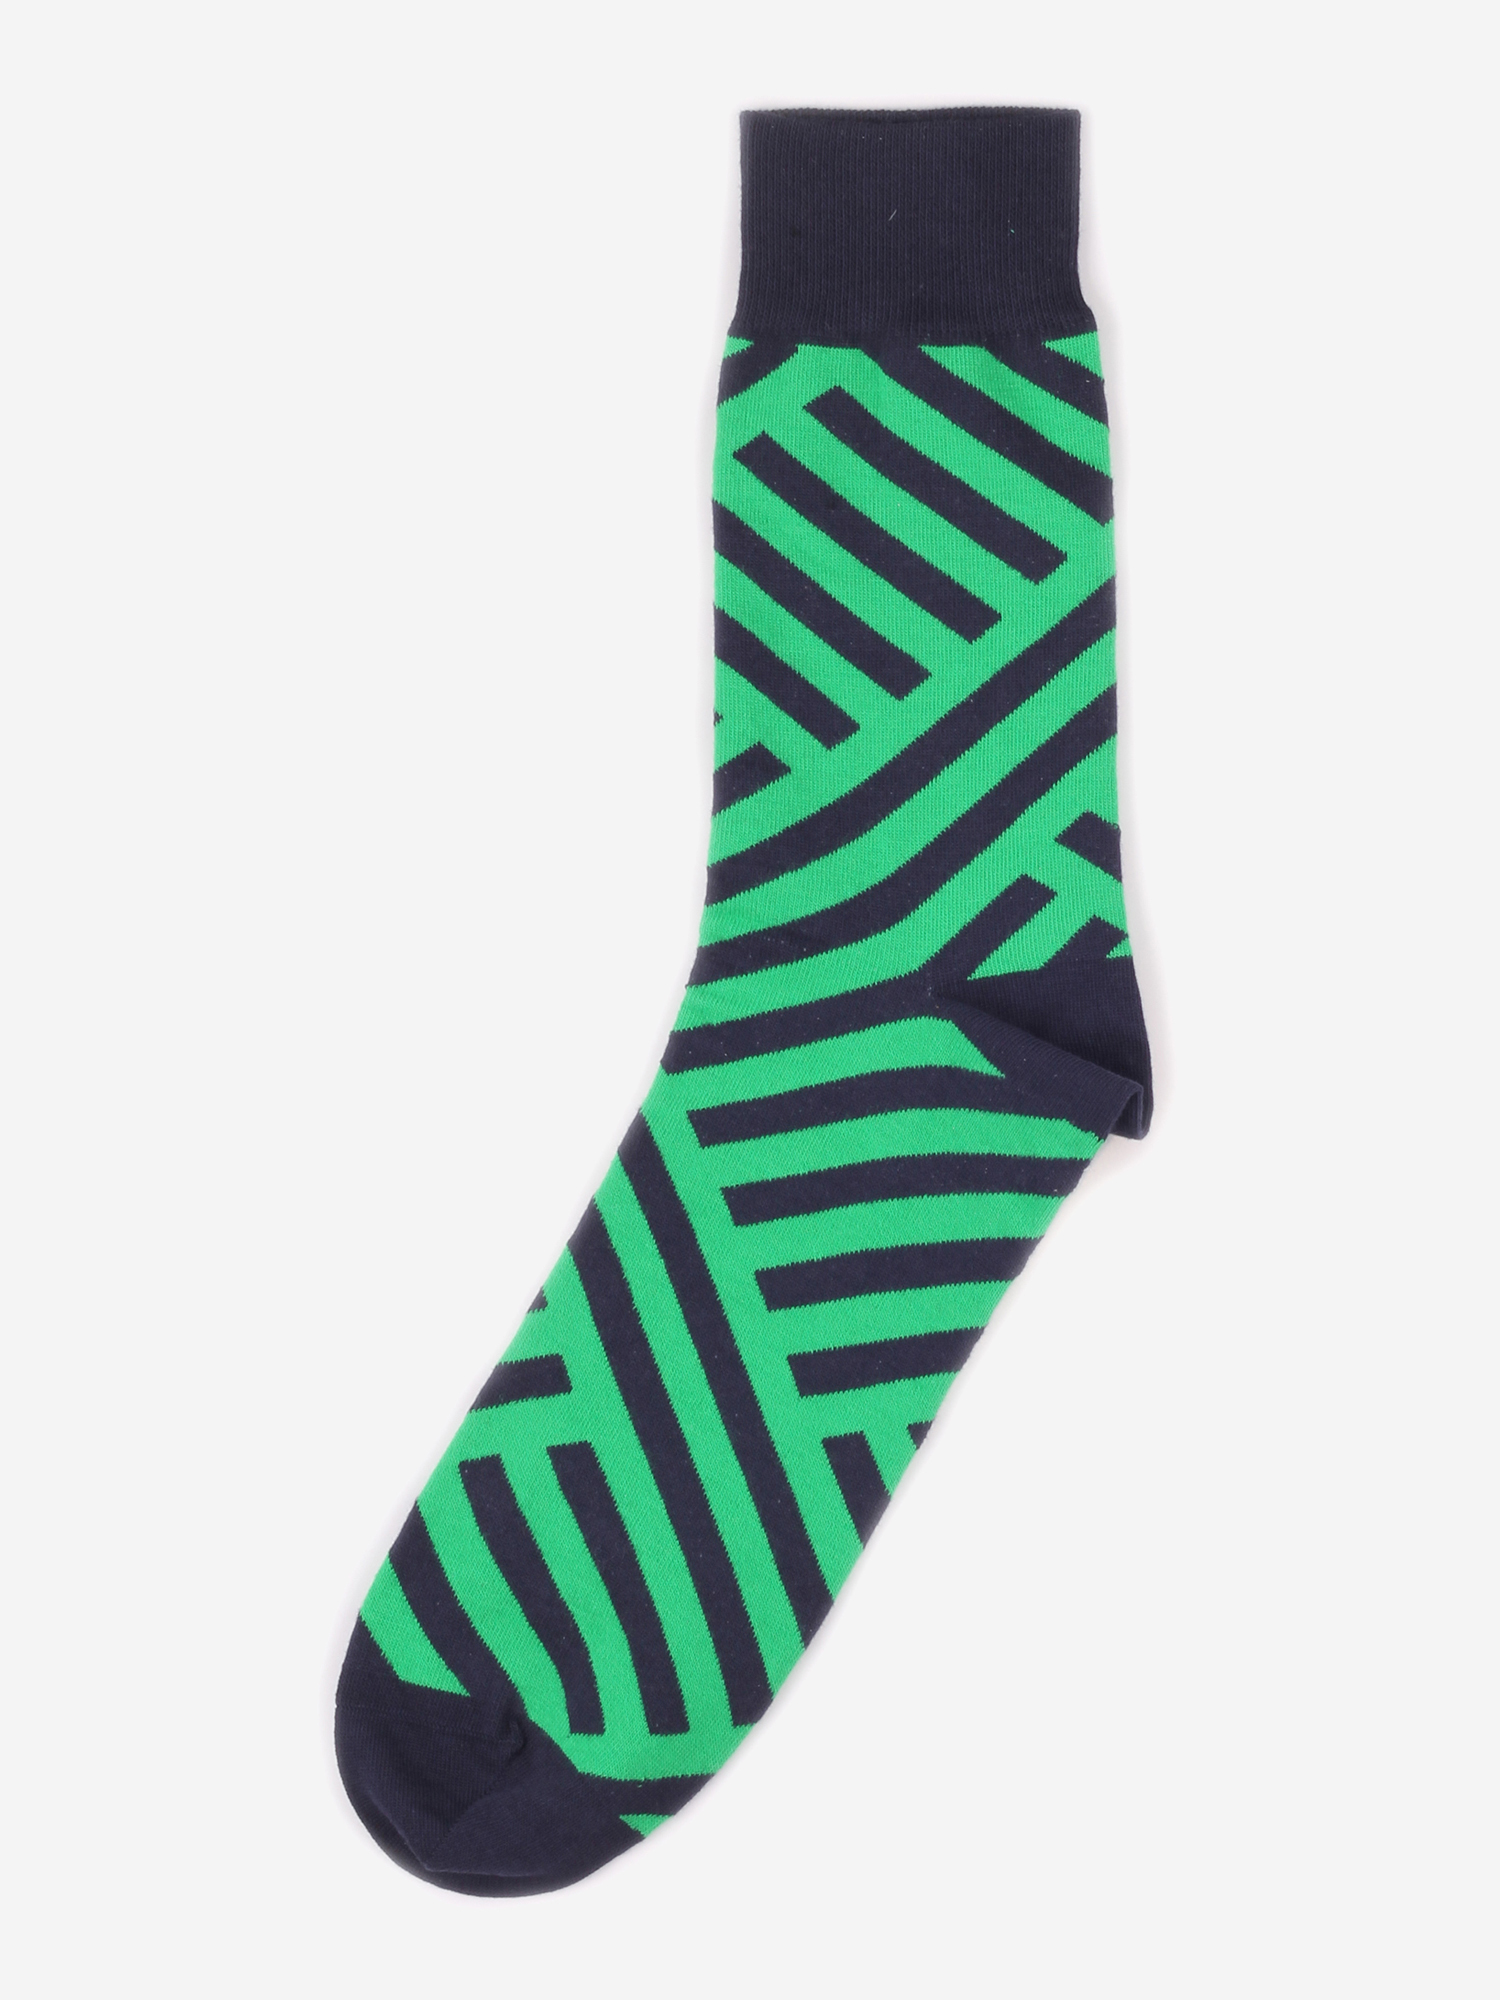 Дизайнерские носки Burning Heels - Diagonal Stripes - Green/Black, Зеленый дизайнерские носки burning heels horizontal stripes green зеленый